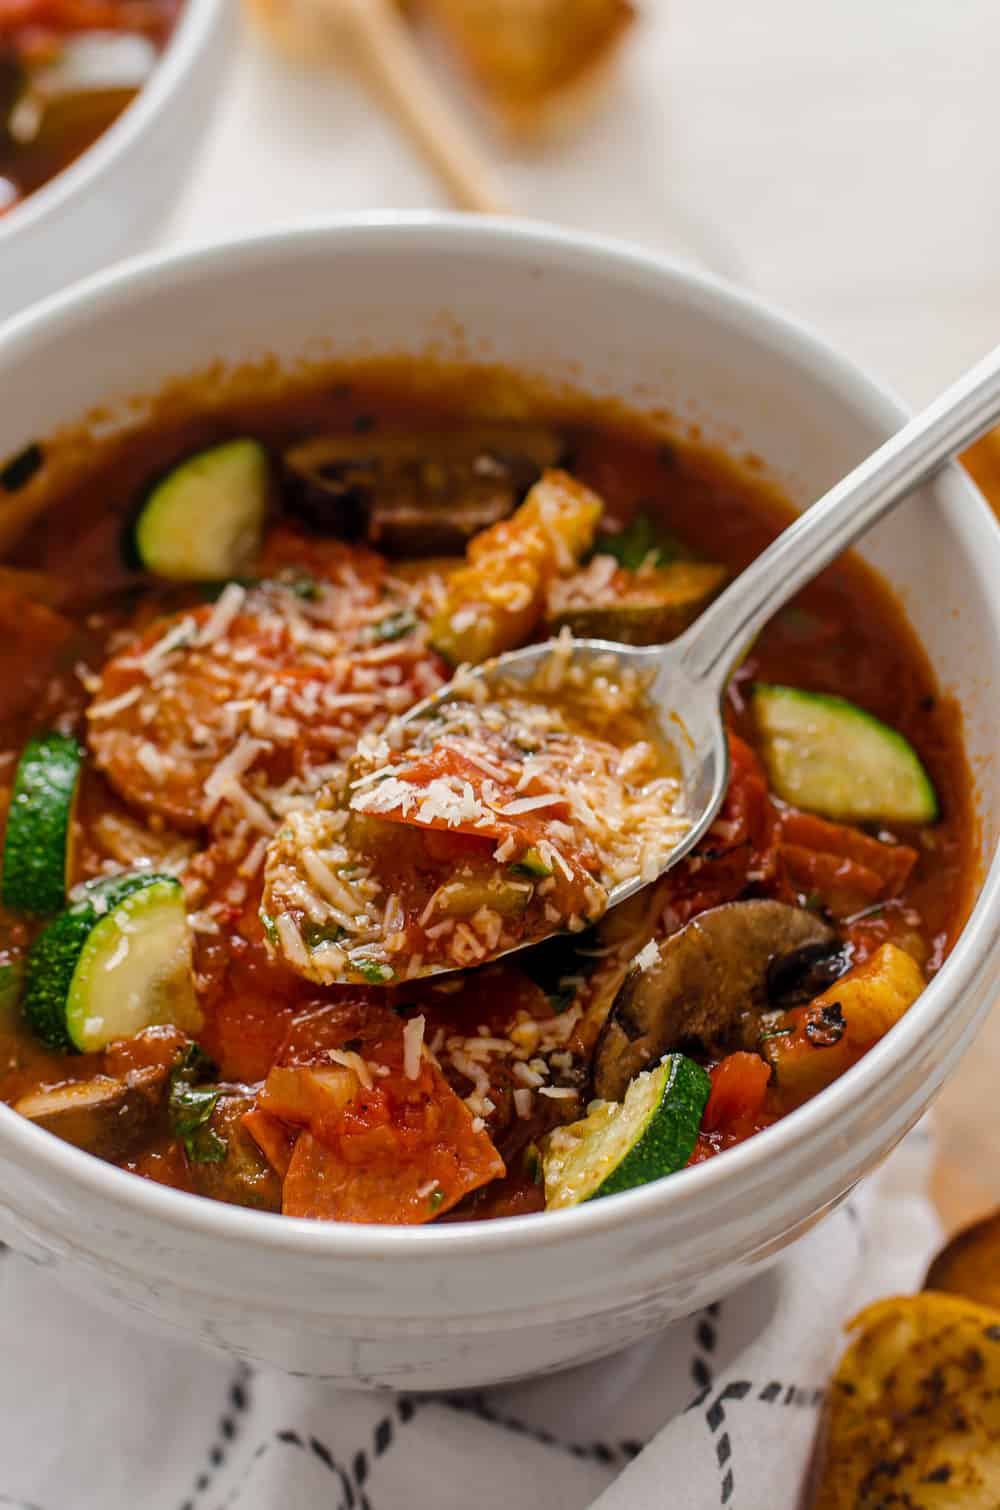 12 Easy Crockpot Soup Recipes - Rachel Cooks®